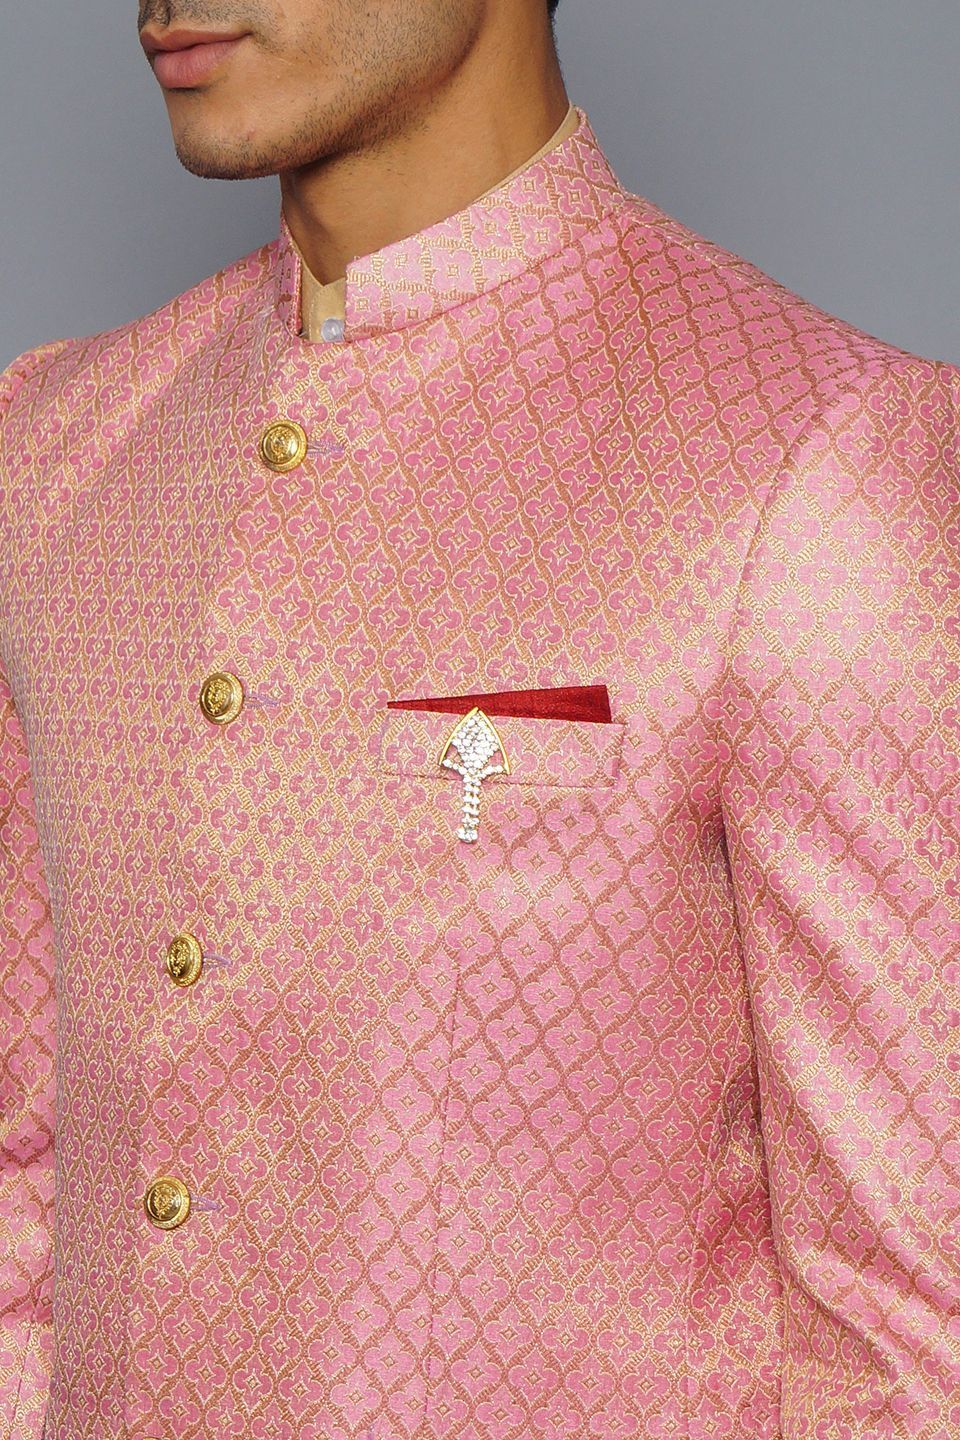 Wintage Men's Banarsi Rayon Cotton Casual and Festive Indian Jodhpuri Grandad Bandhgala Blazer : Pink